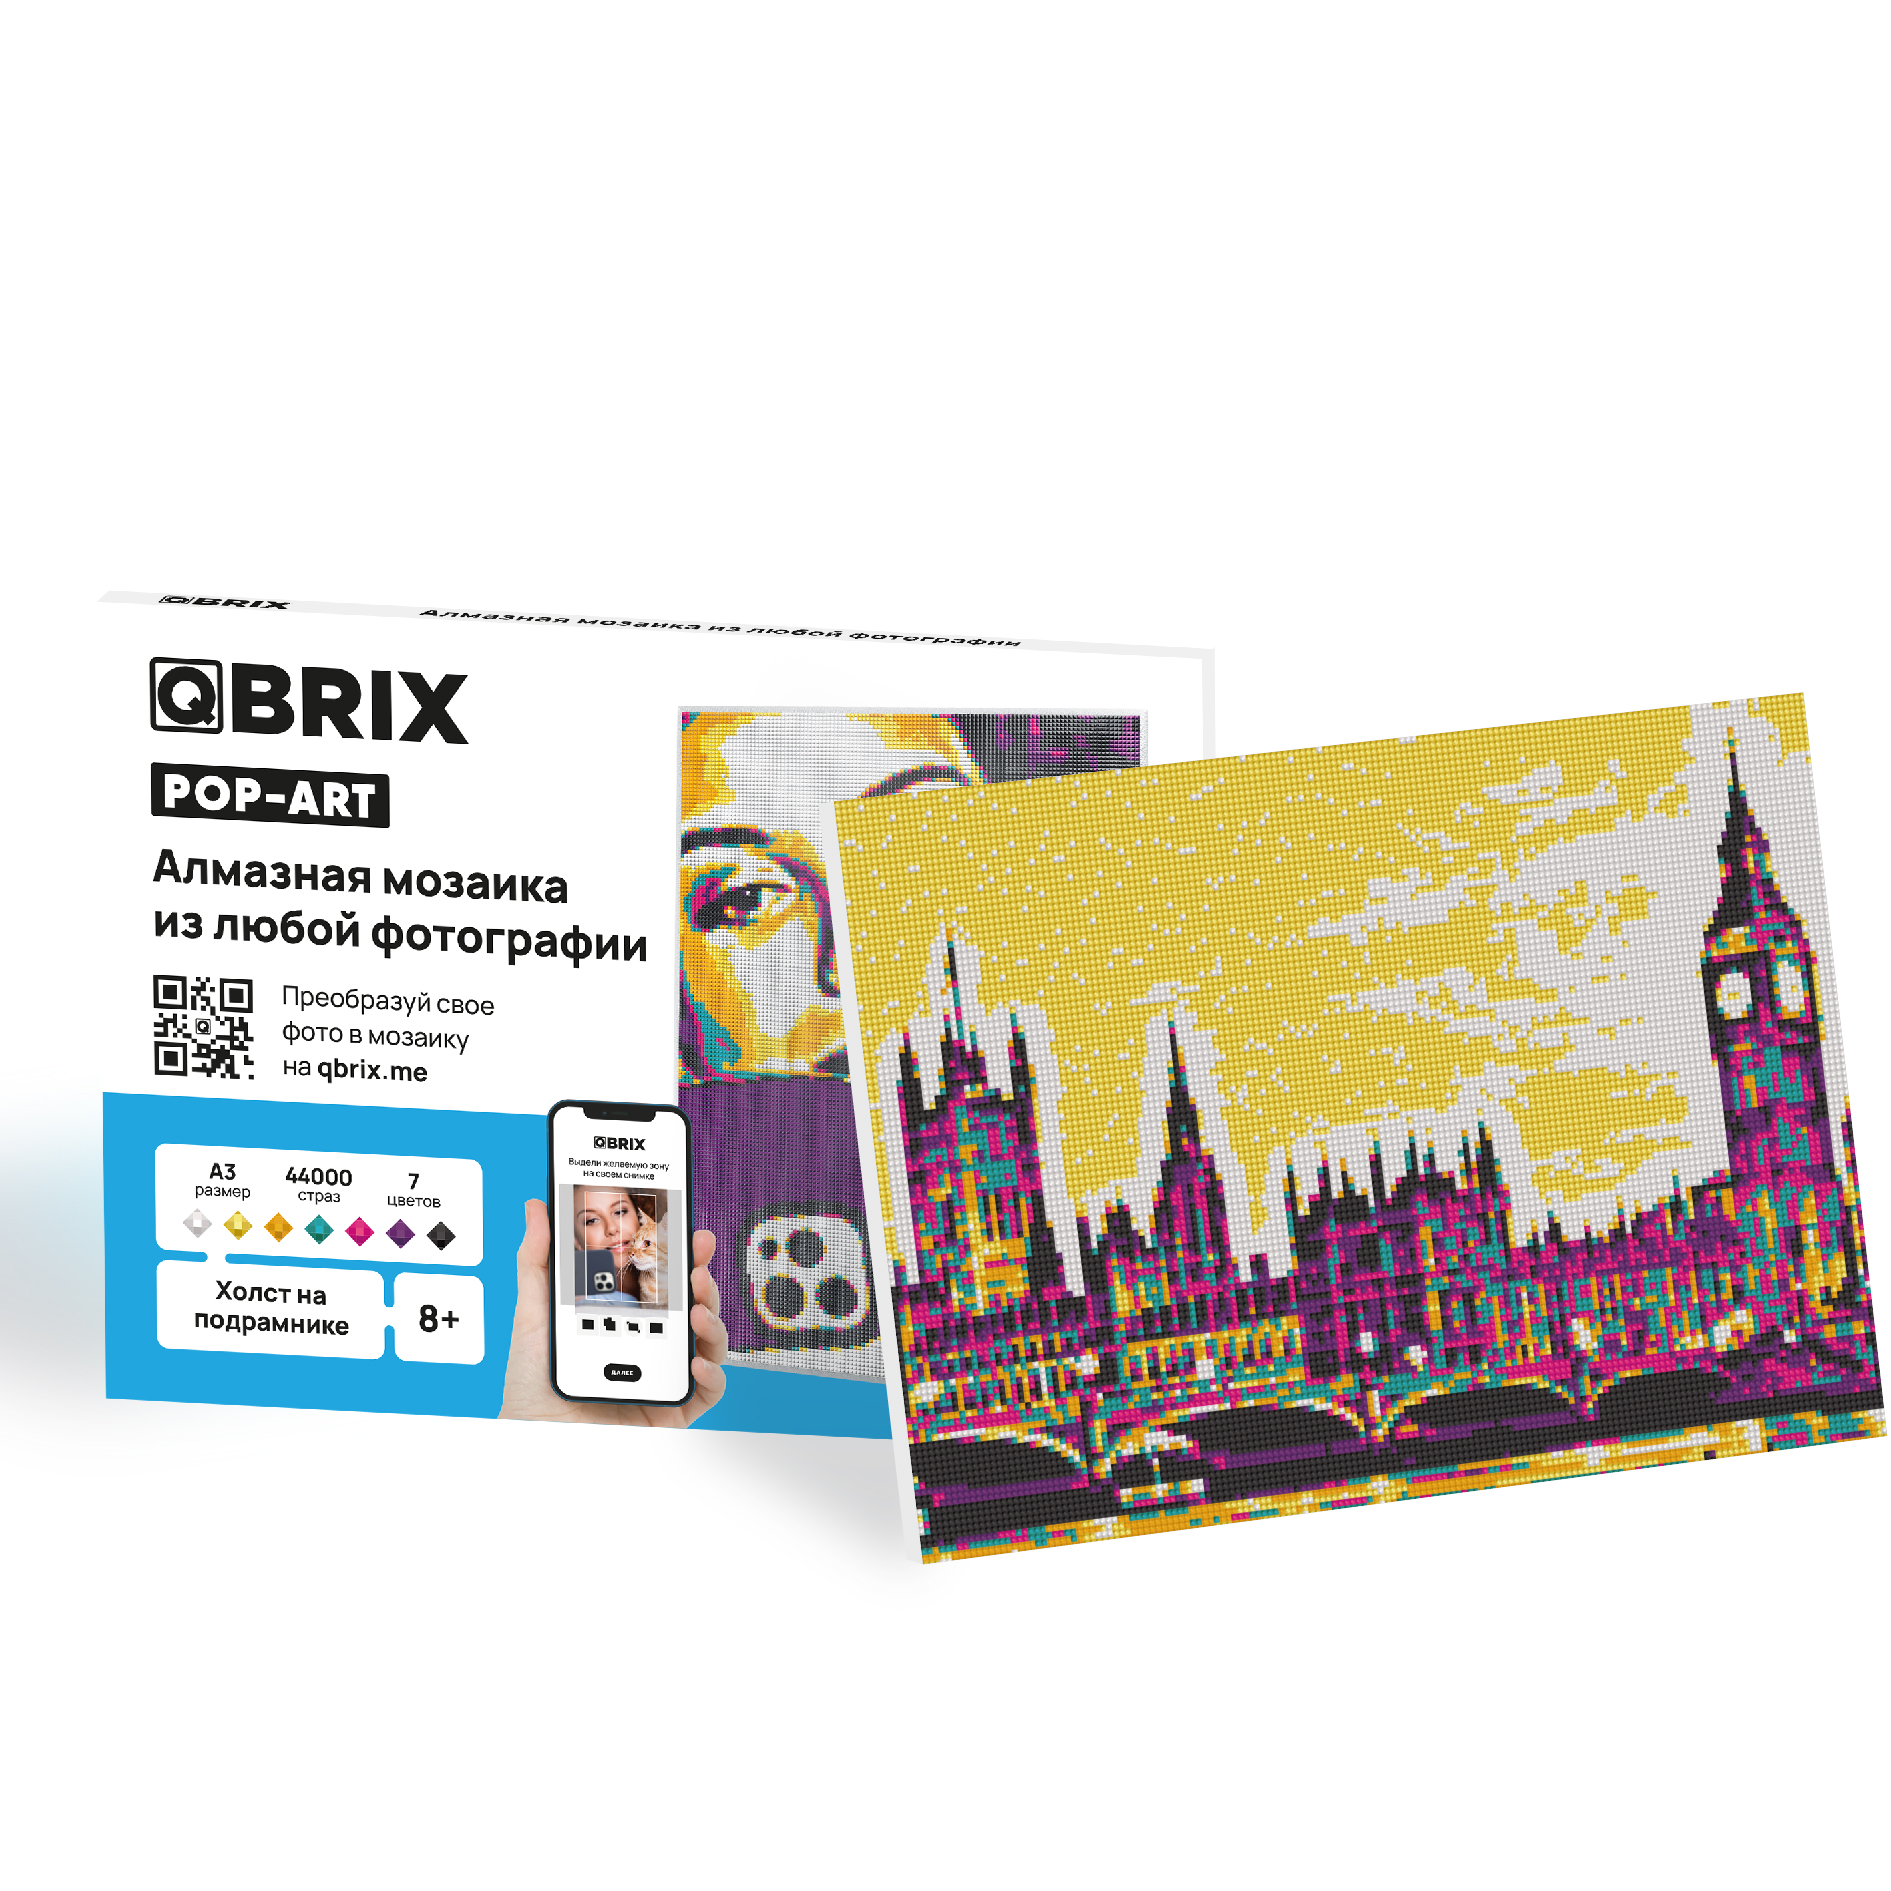 Алмазная фото-мозаика на подрамнике QBRIX POP-ART 40009 А3, 7 цветов, 44000 страз